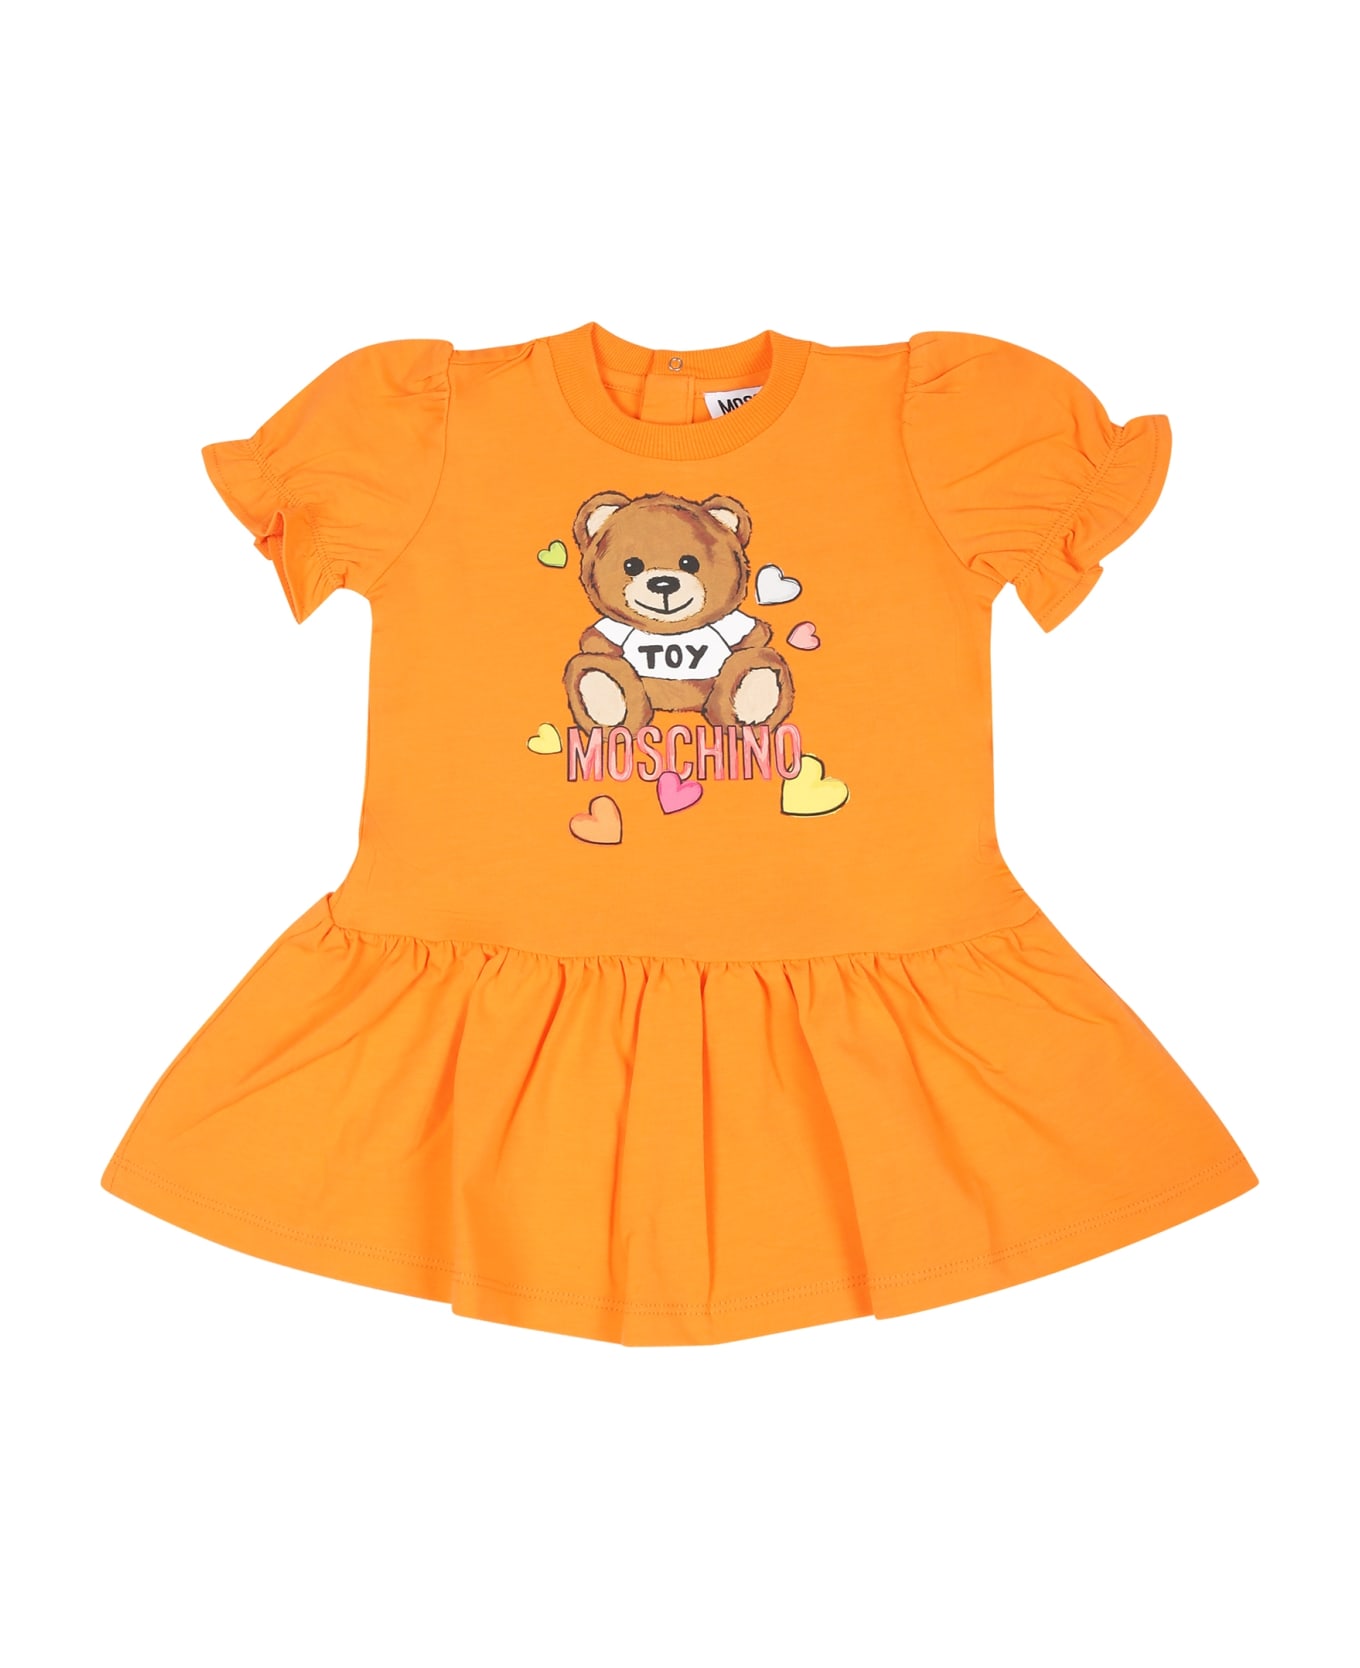 Moschino Orange Dress For Baby Girl With Teddy Bear And Hearts - Orange ウェア